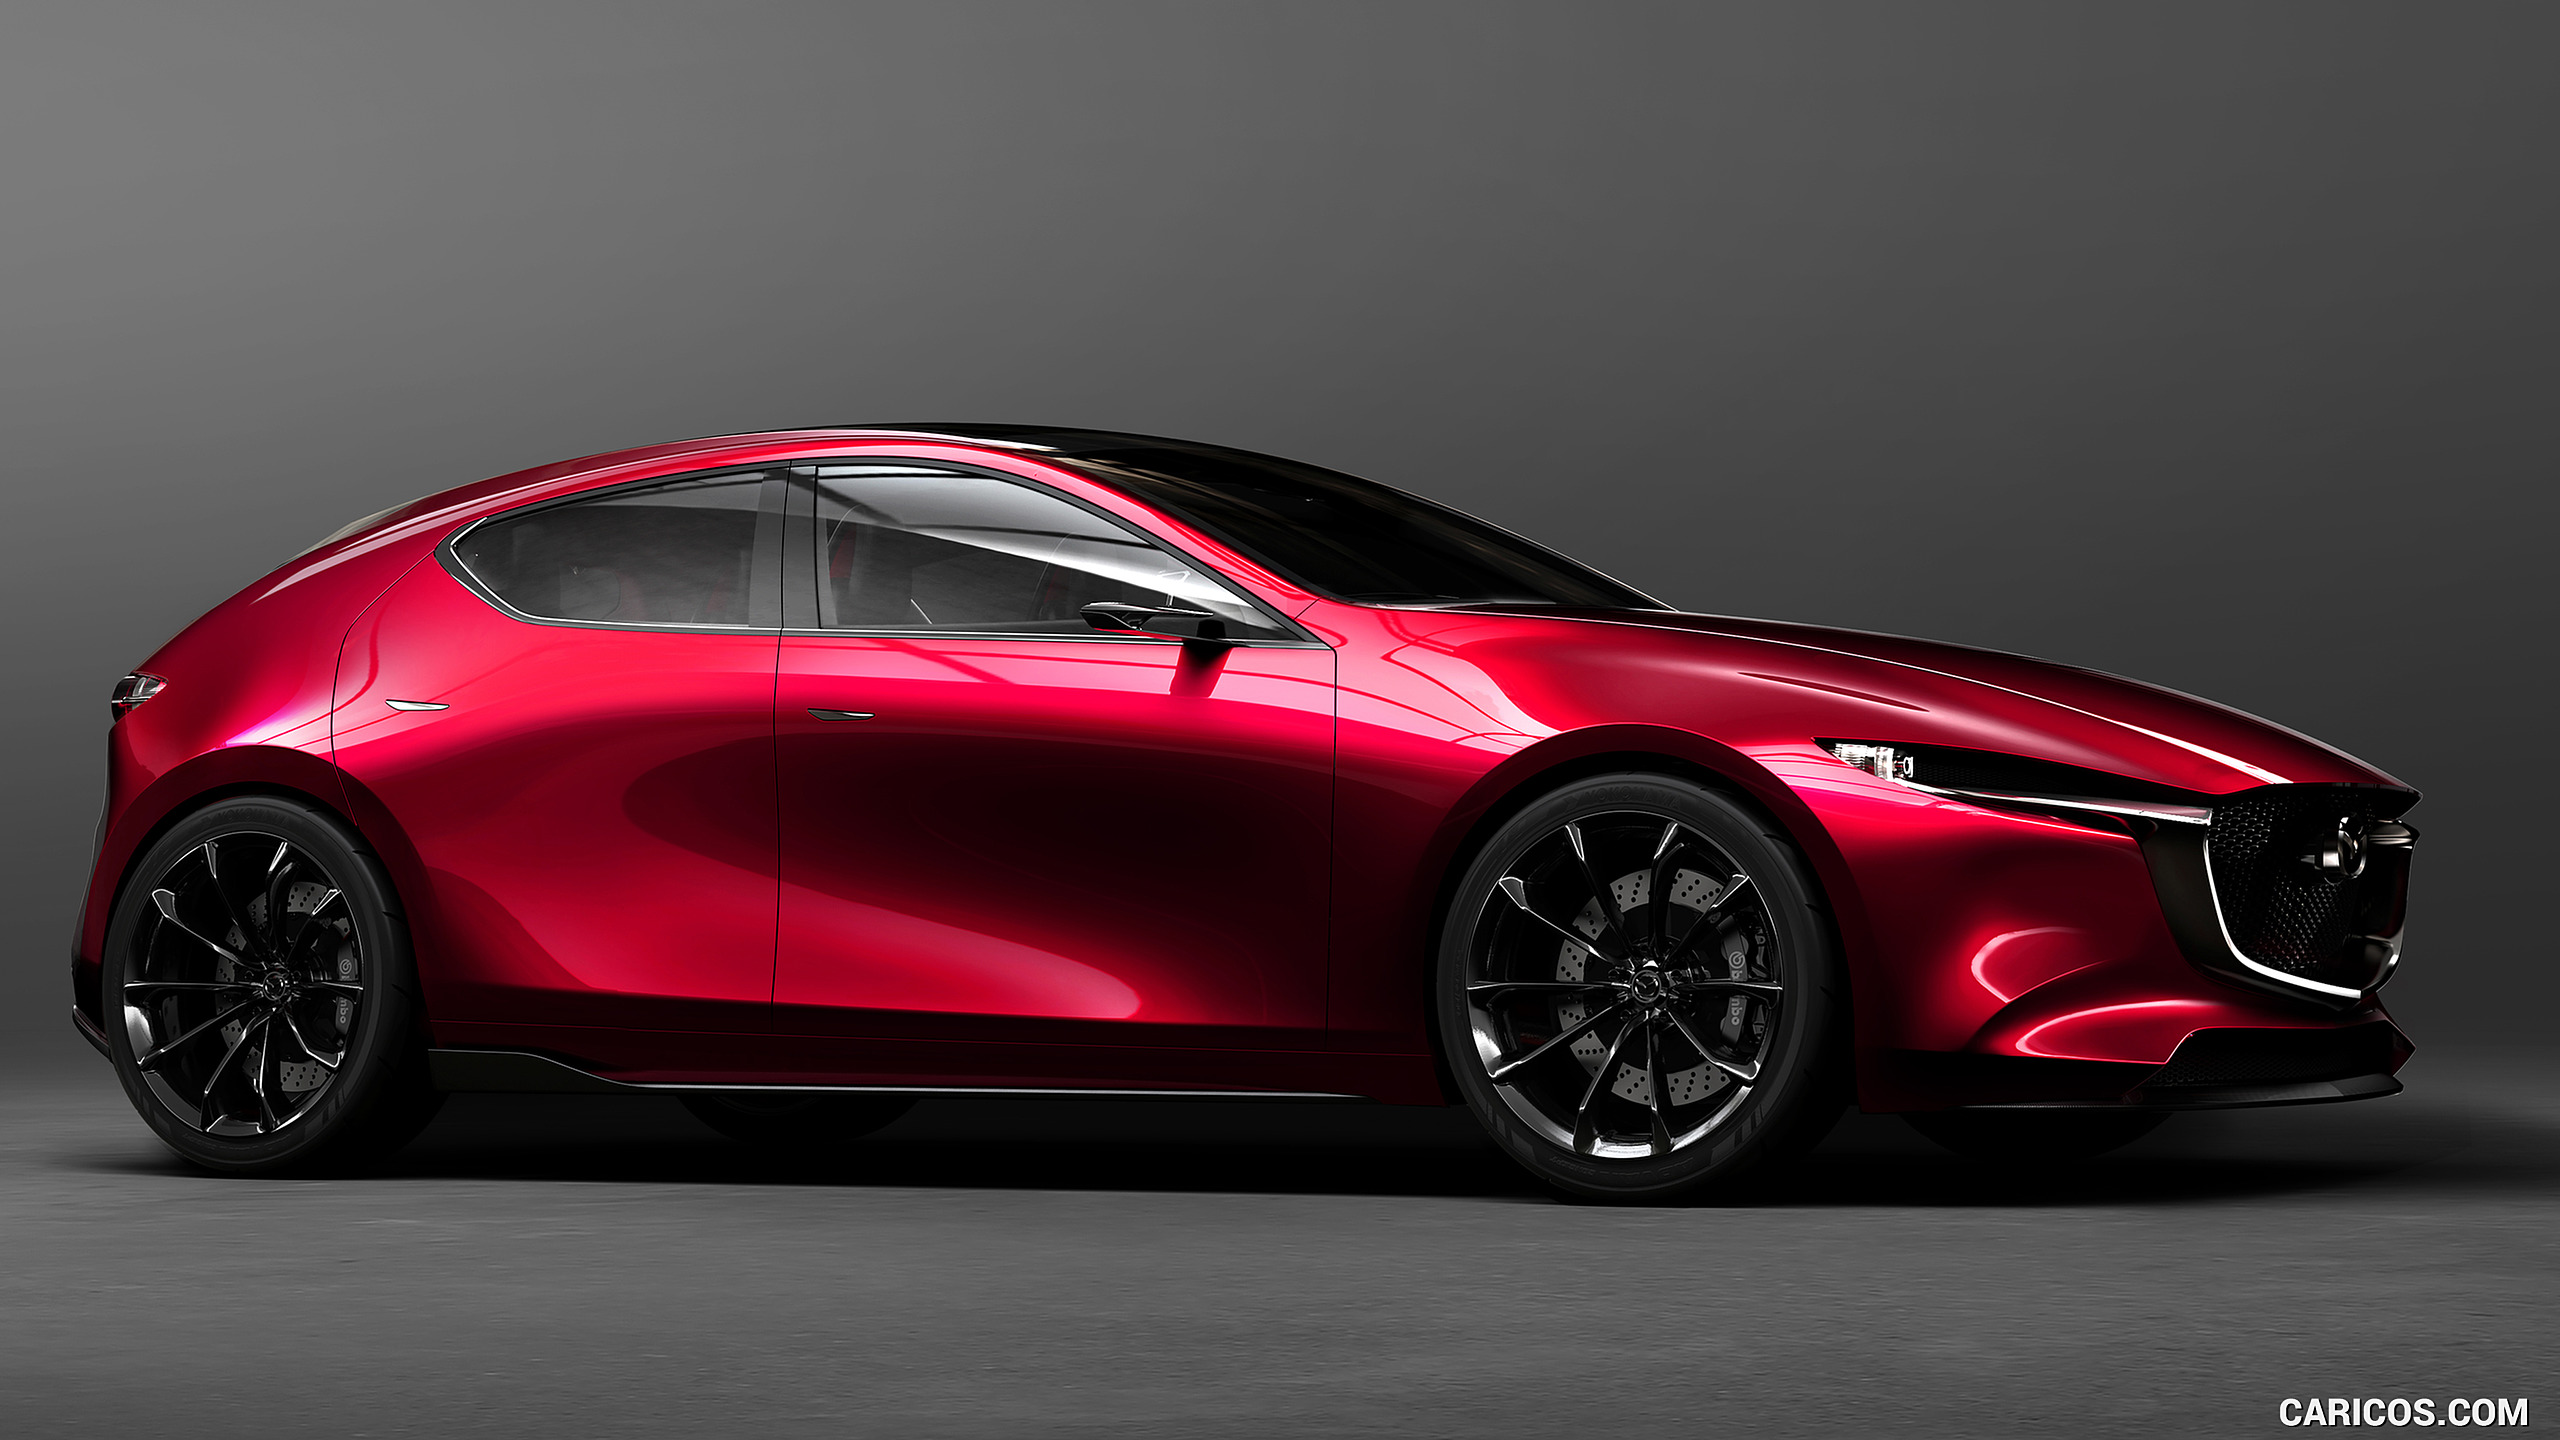 2017 Mazda KAI Concept - Side, #8 of 13